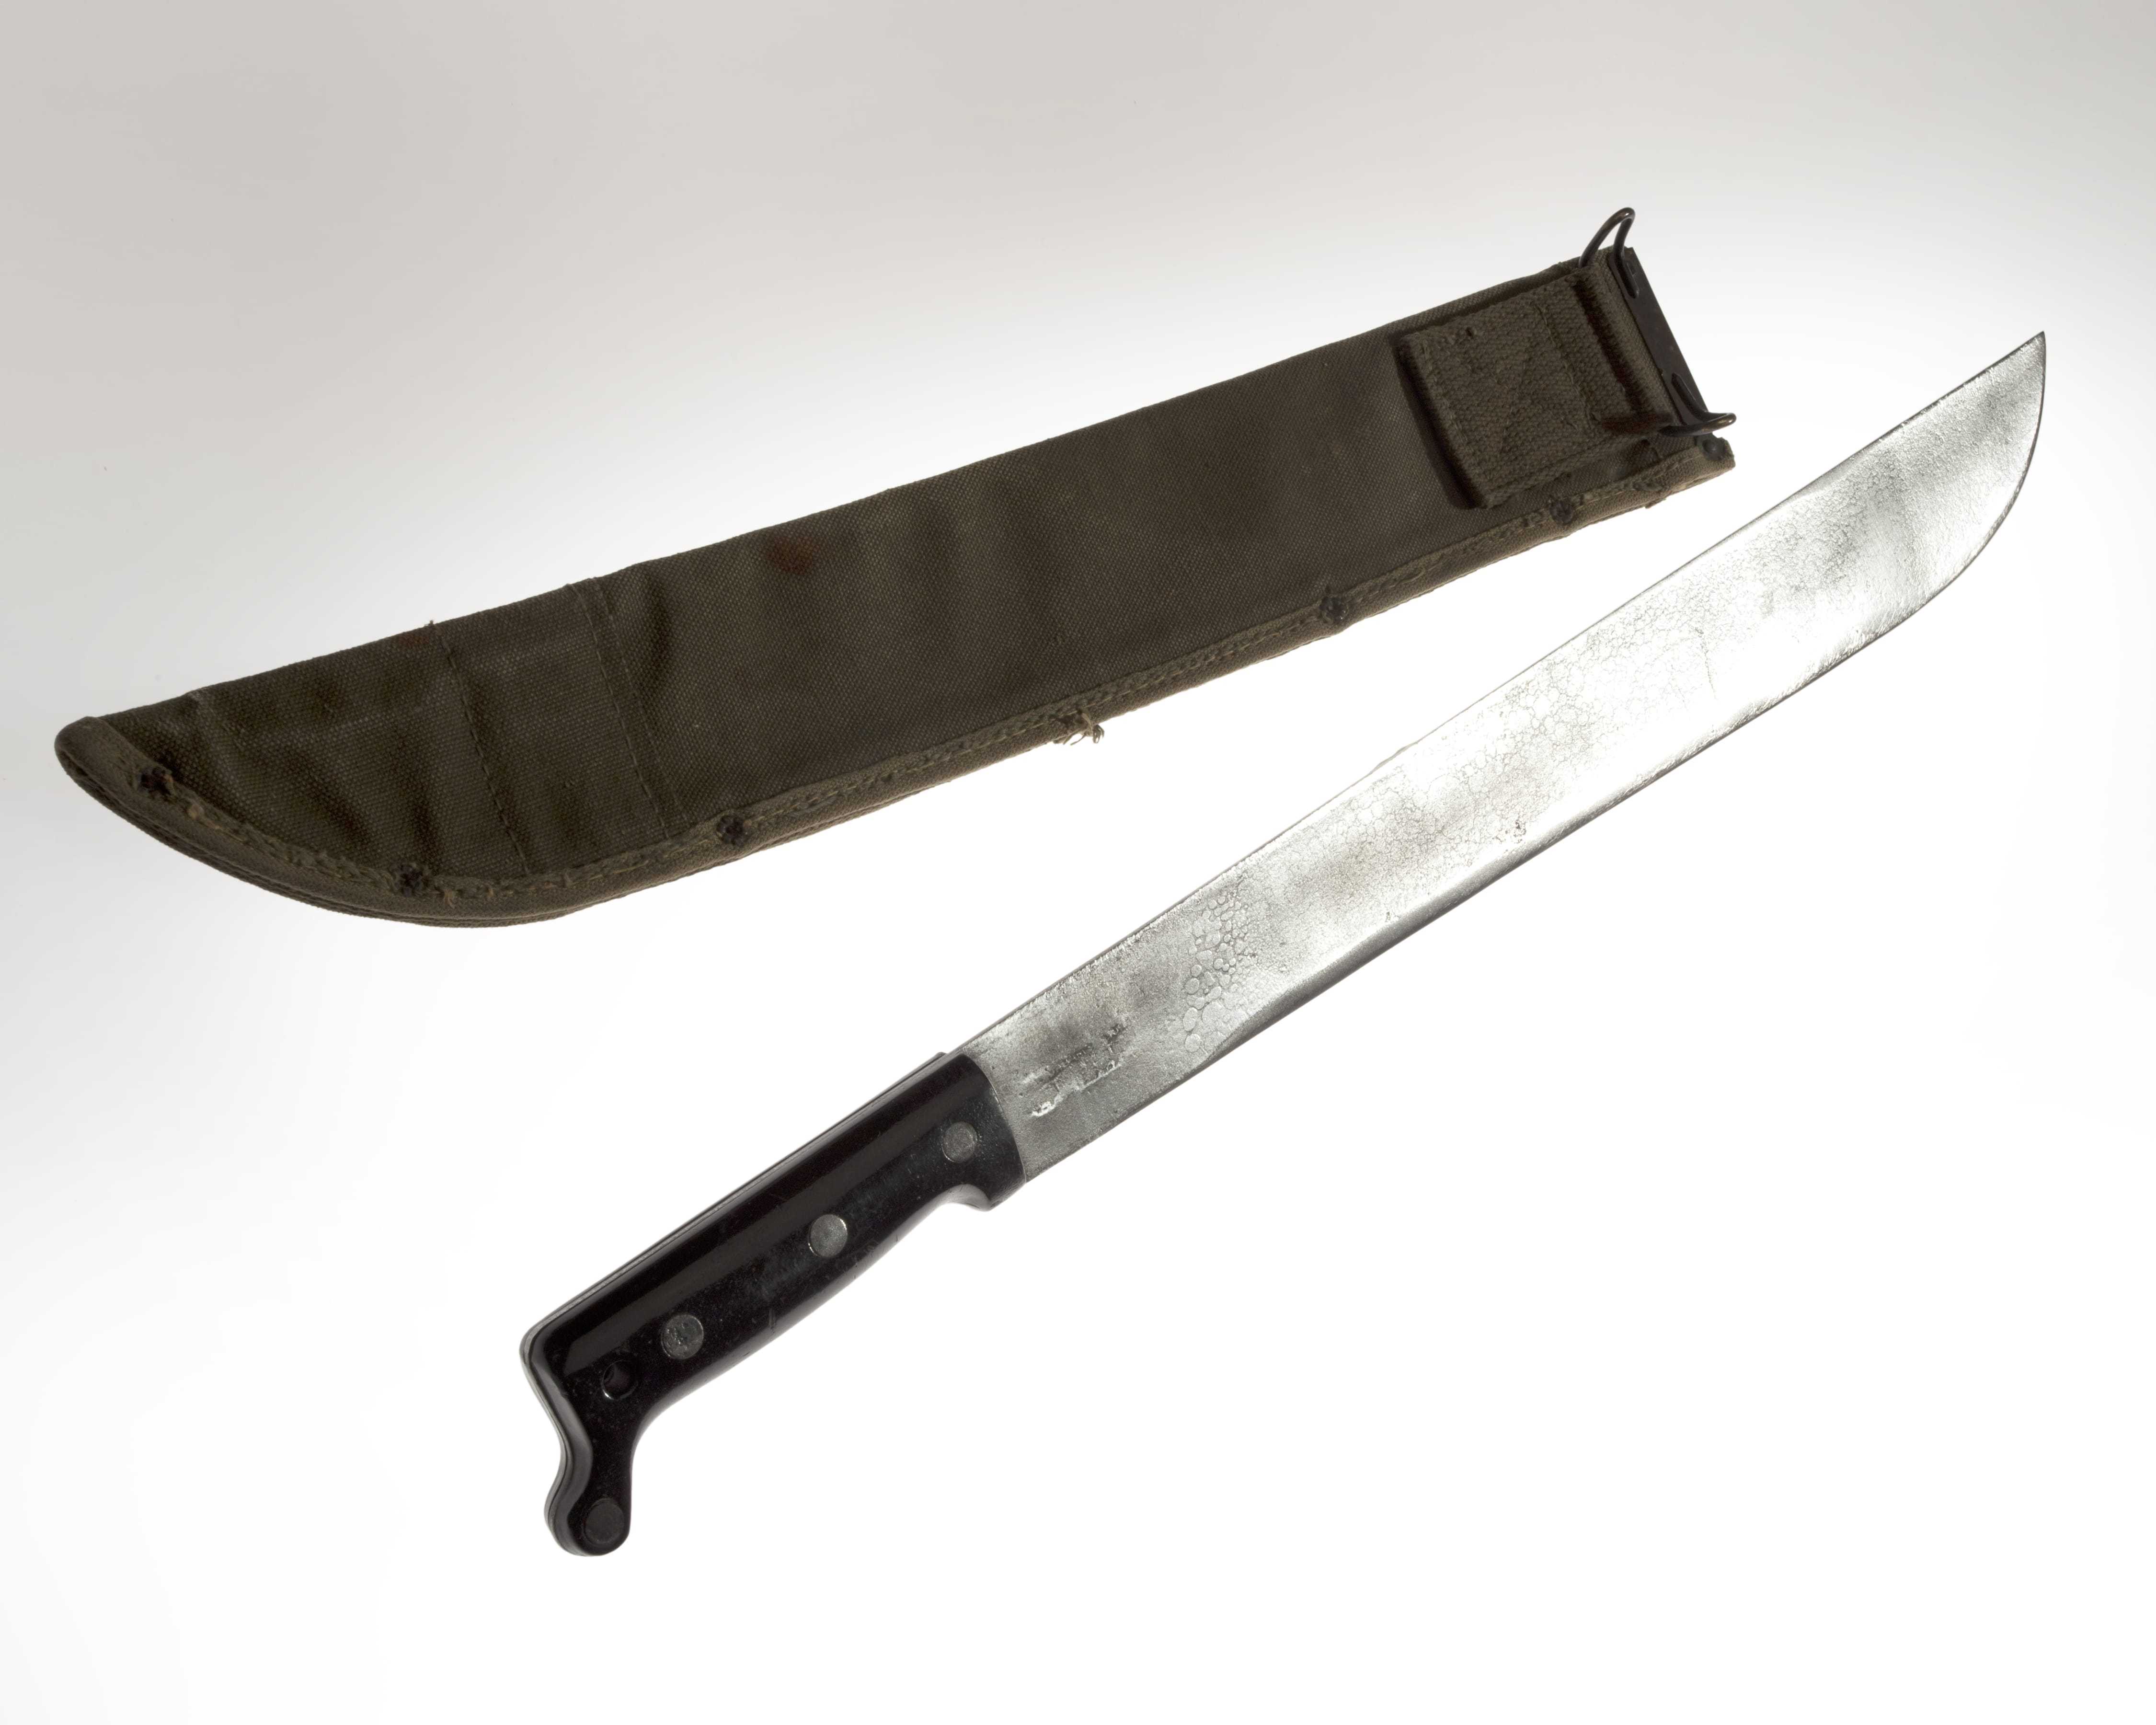 A machete with a black handle and a dark cloth sheath